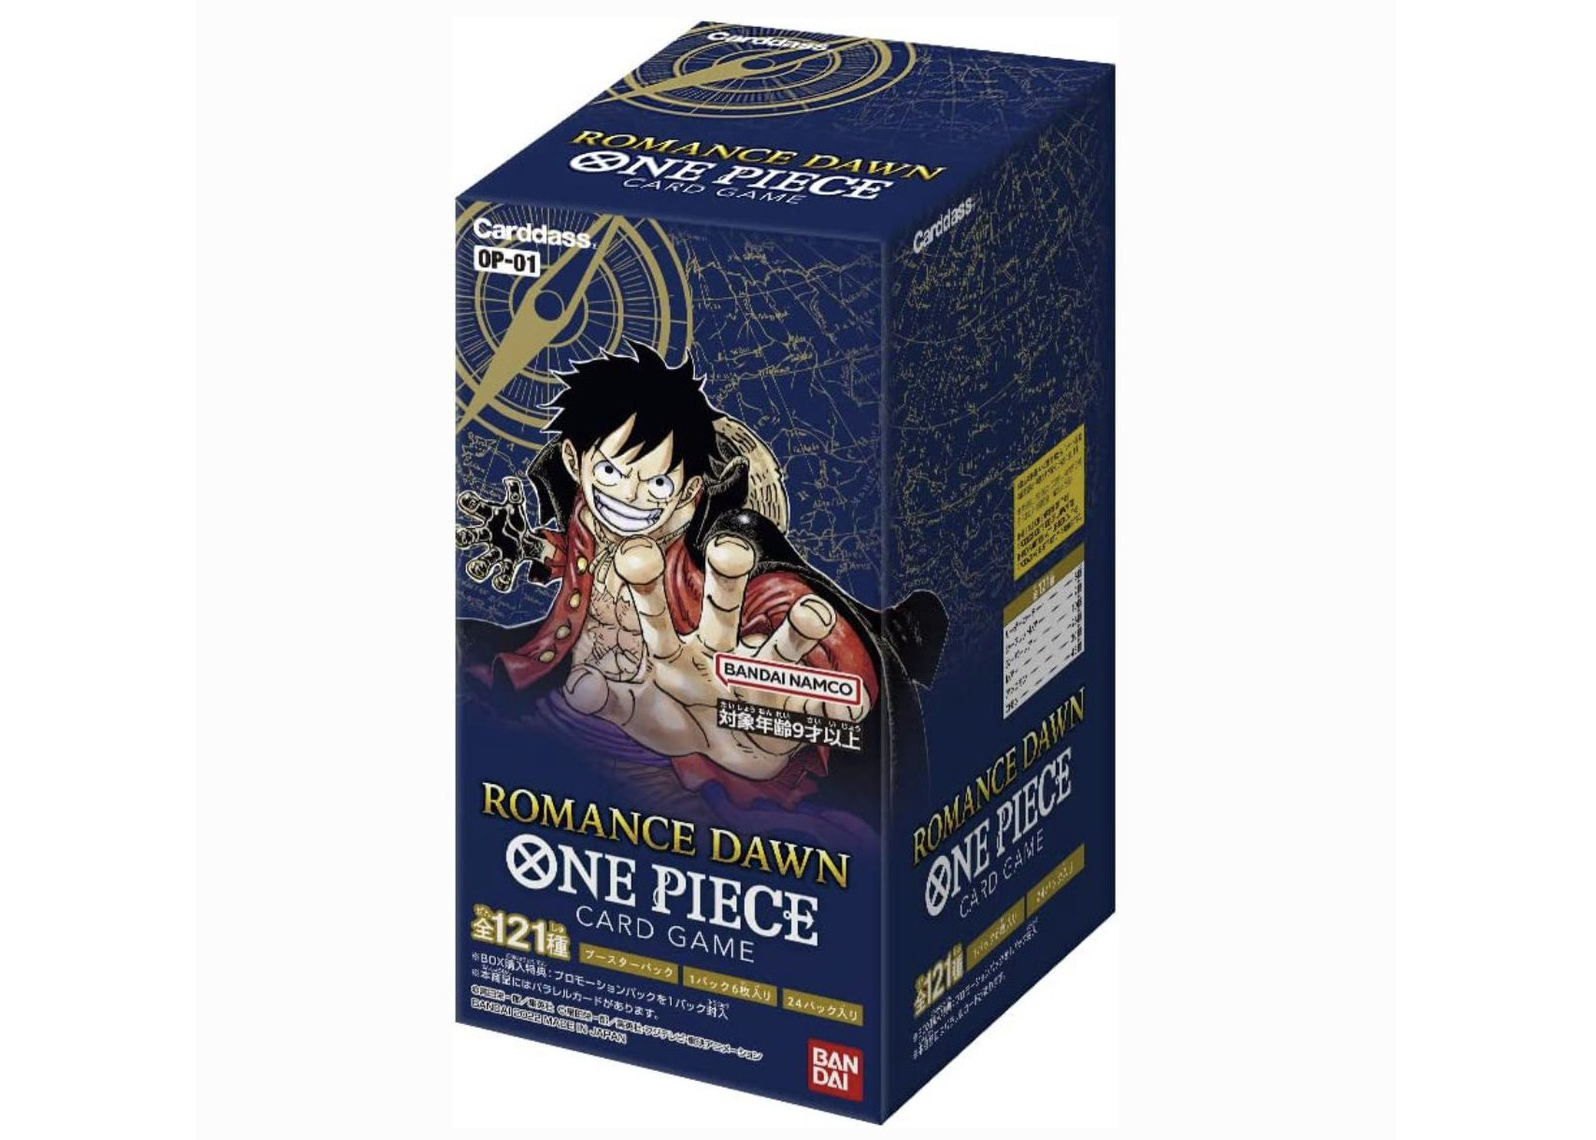 Bandai One Piece Card Game Romance Dawn Carddass Booster Box (OP-01)  (Japanese)